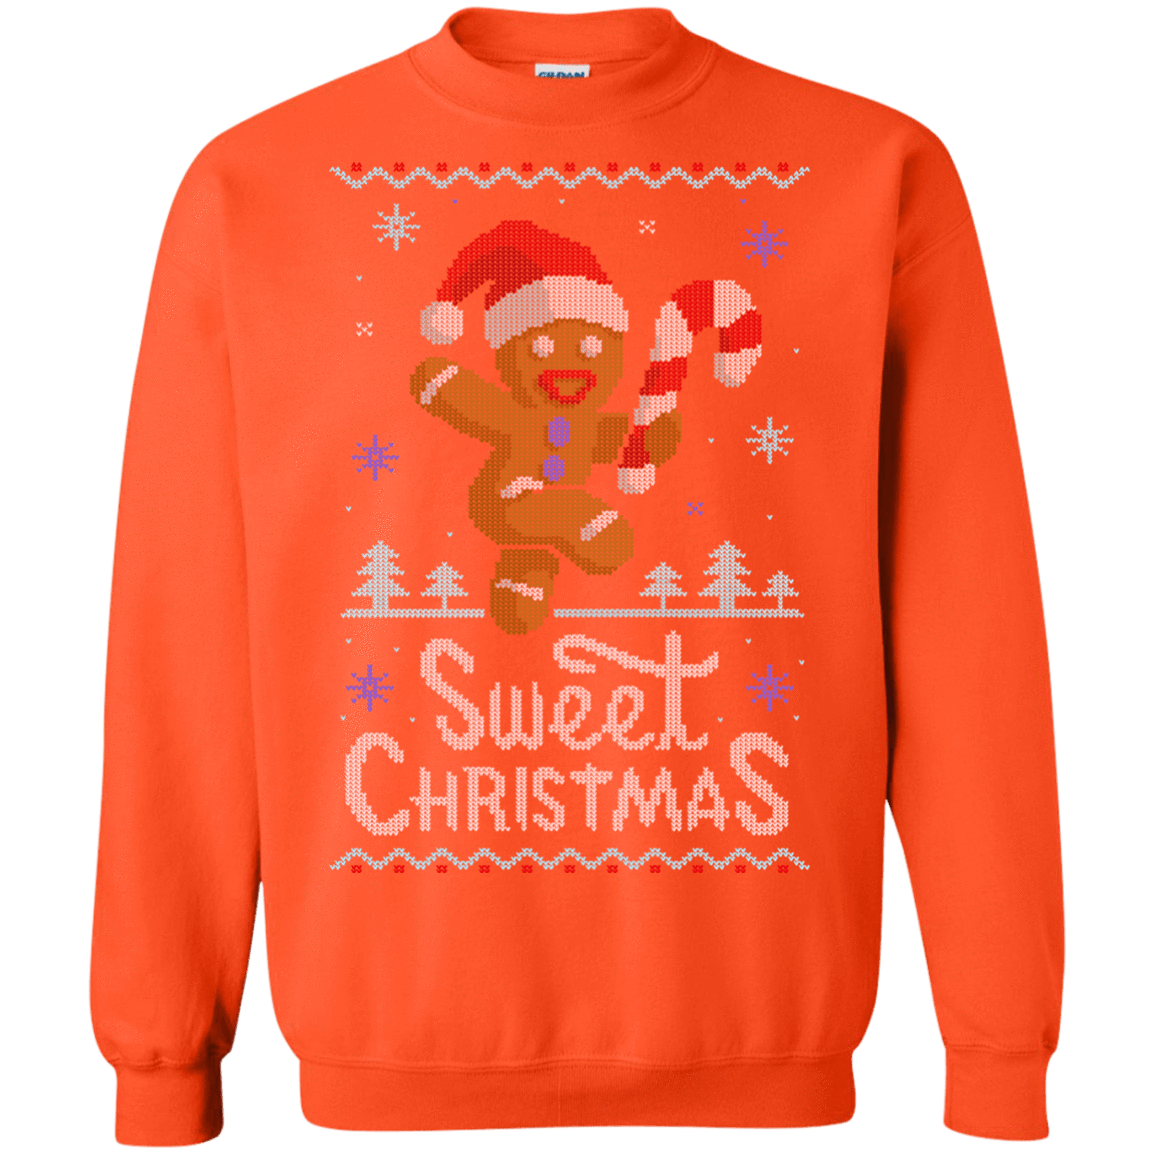 Sweatshirts Orange / Small Ginger Bread Sweater Crewneck Sweatshirt